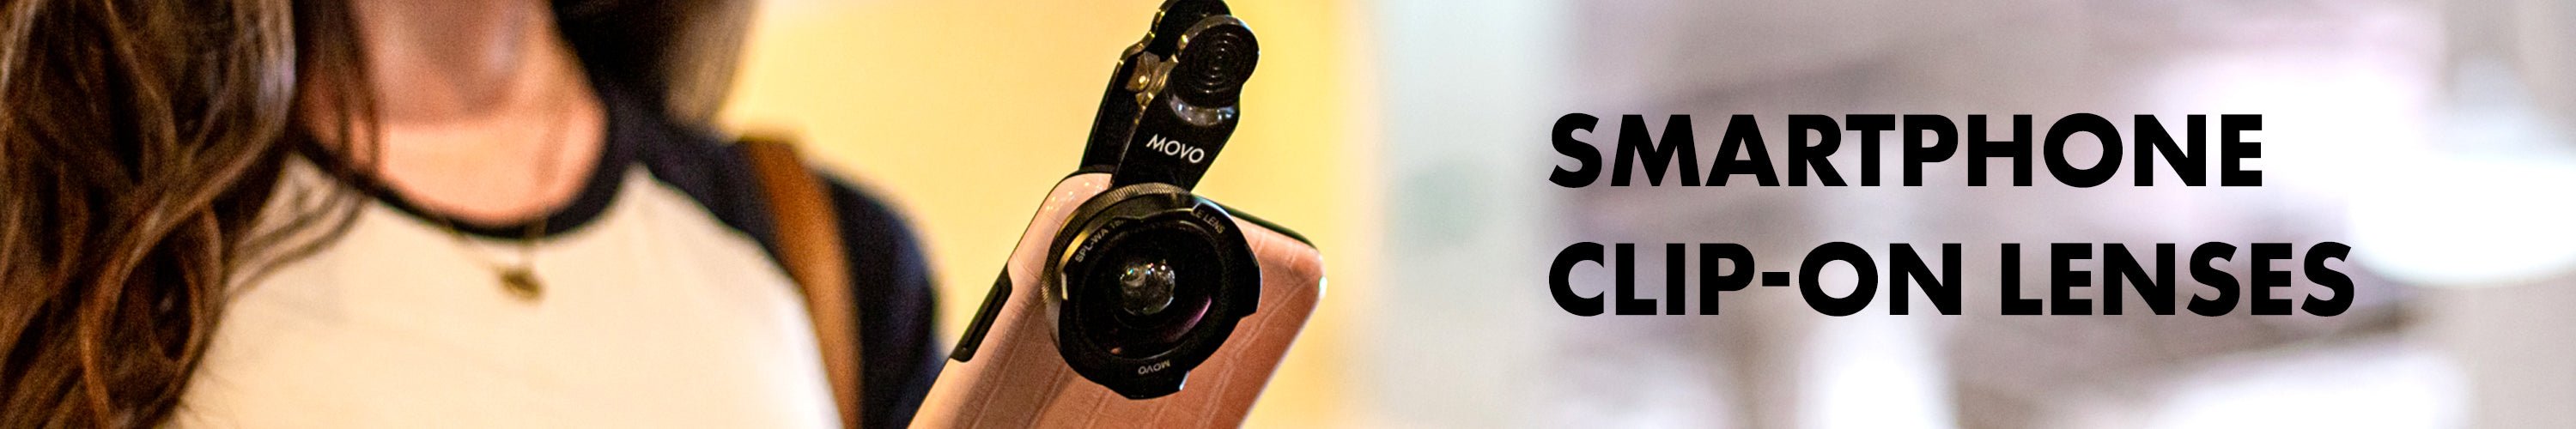 Smartphone Clip-on Lenses - Movo